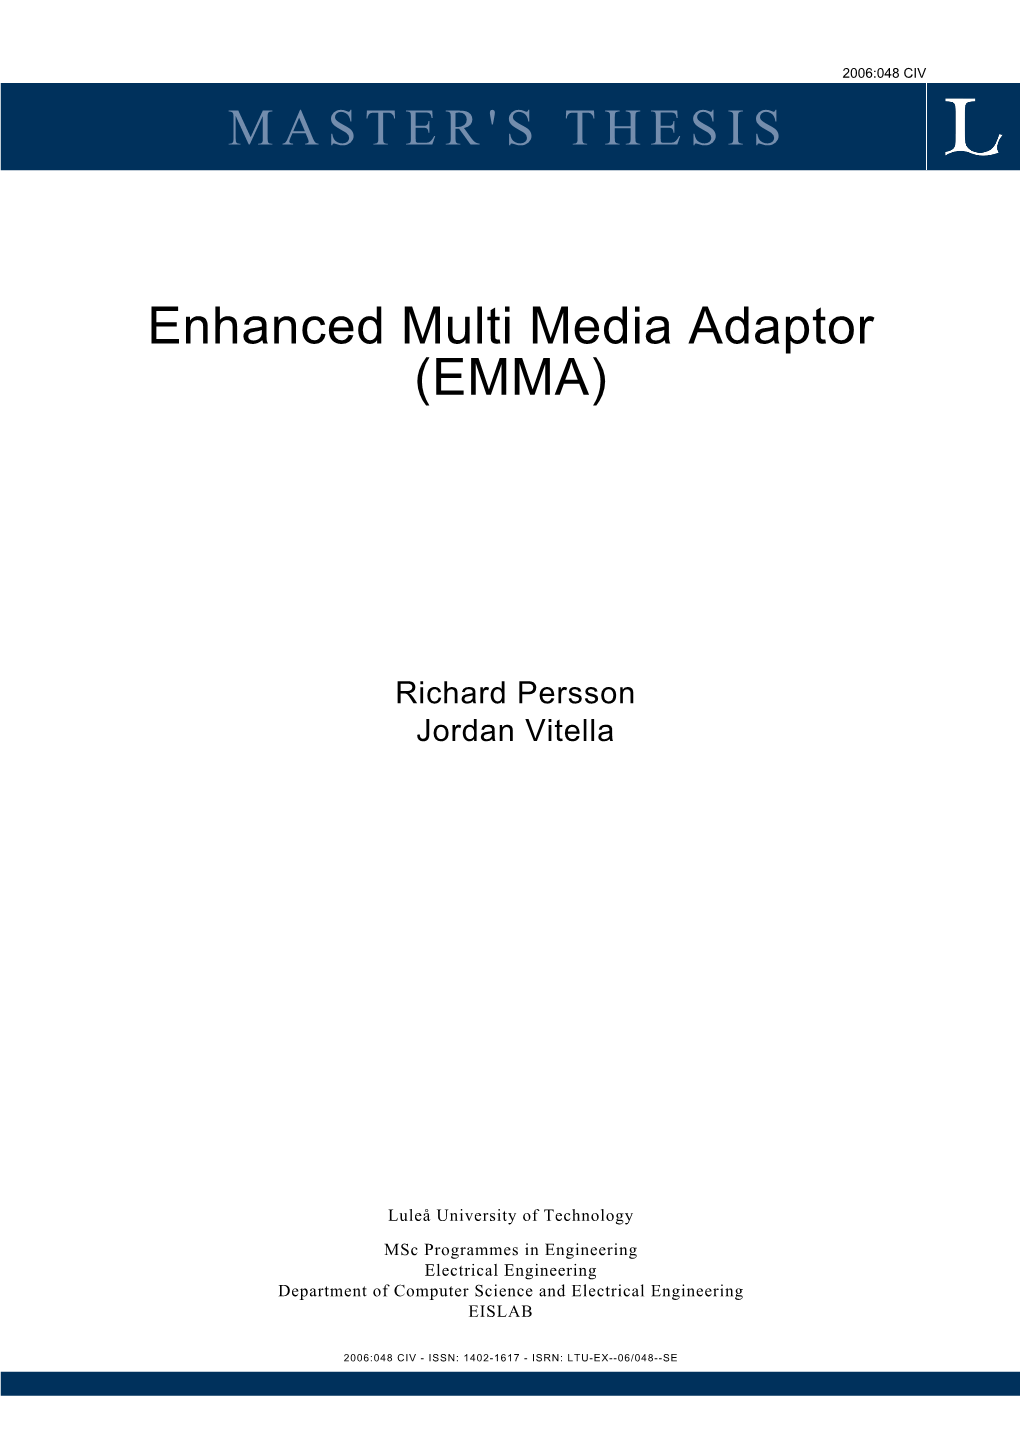 Enhanced Multi Media Adaptor (EMMA)